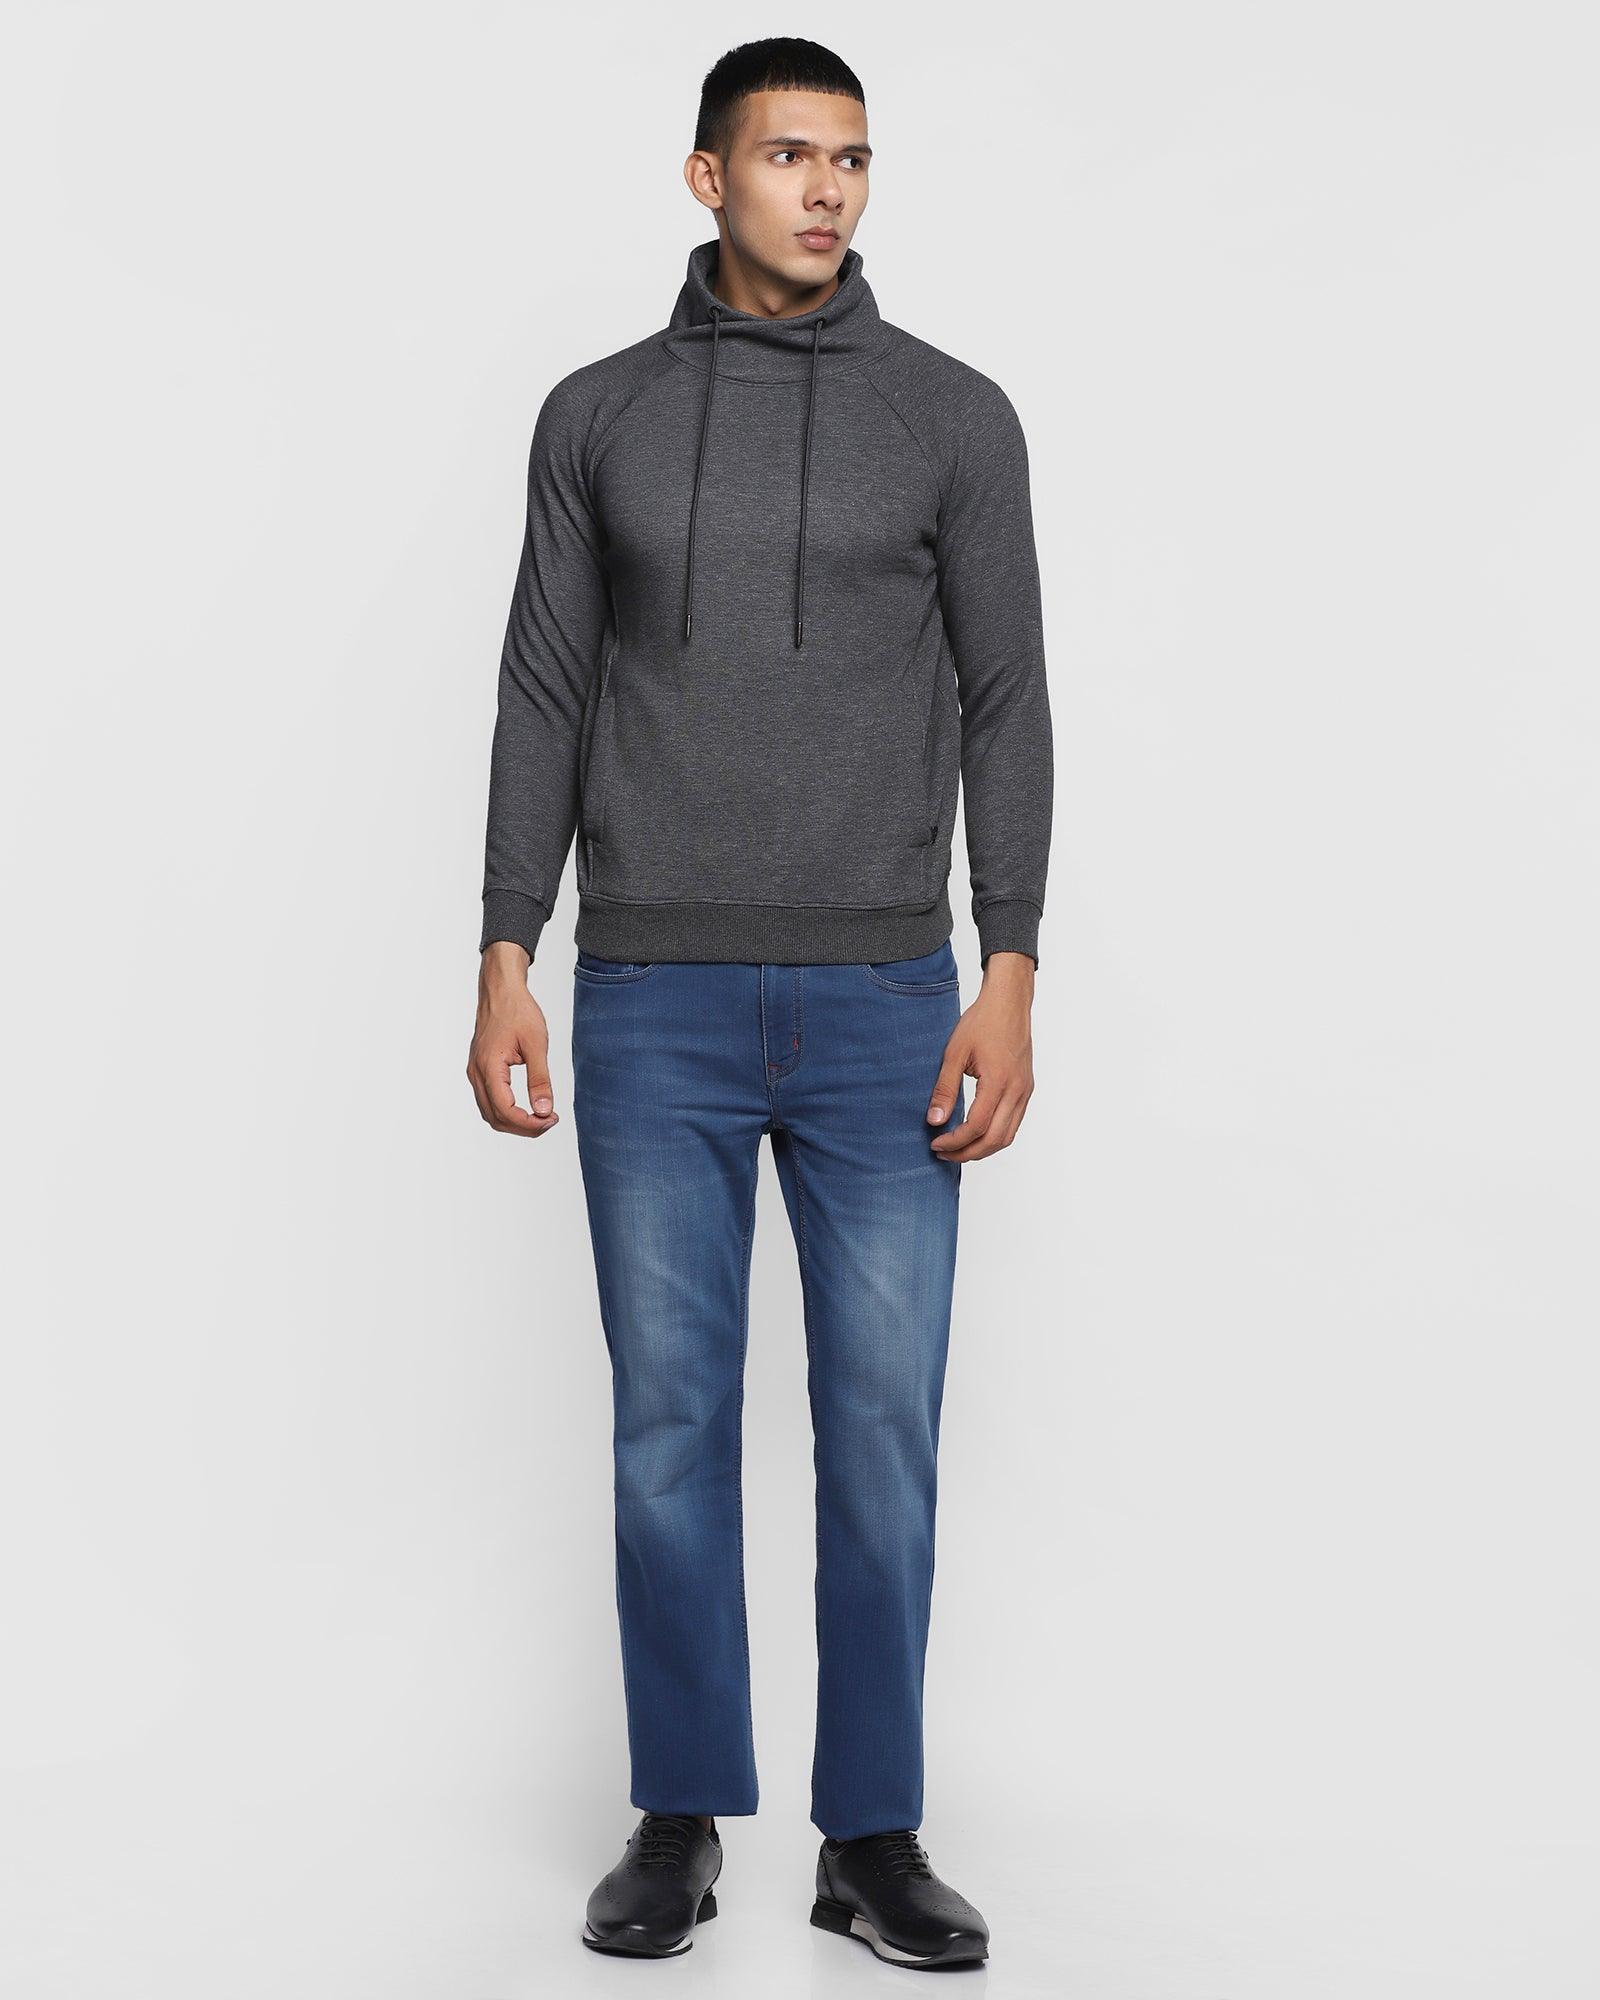 Stylized Collar Dark Grey Melange Solid Sweatshirt - Kang